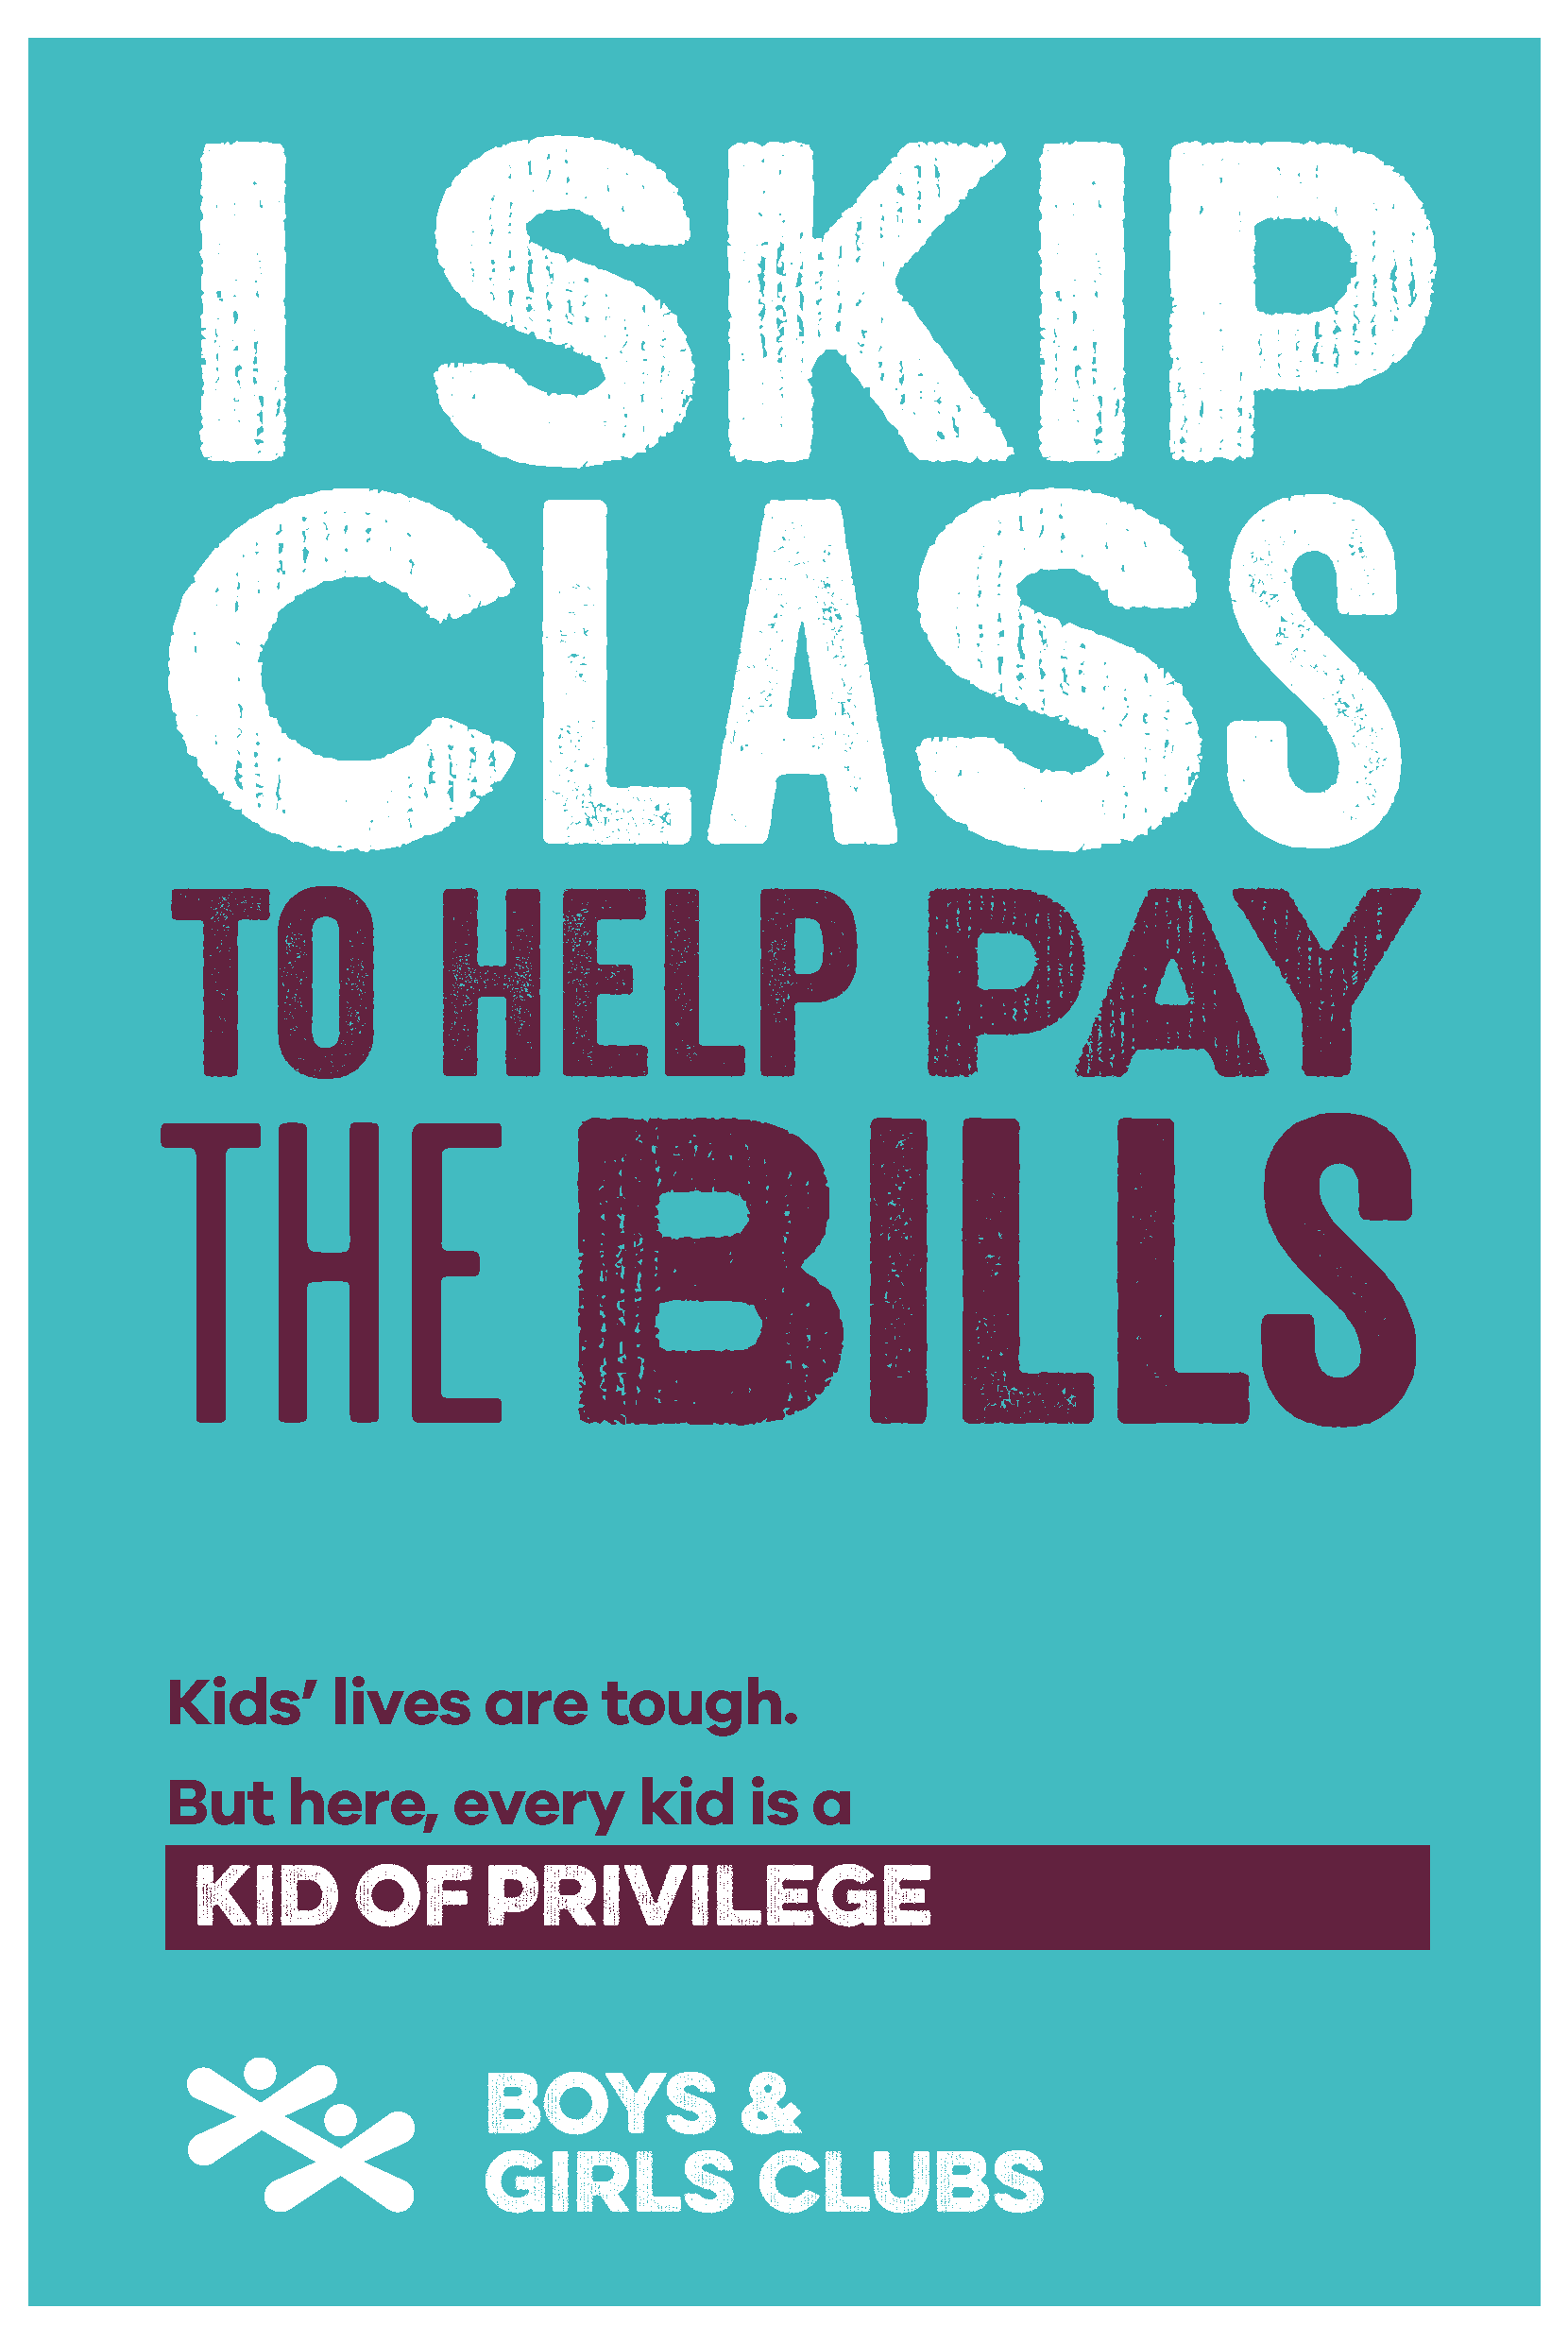 BGC Kid of Privilege Campaign